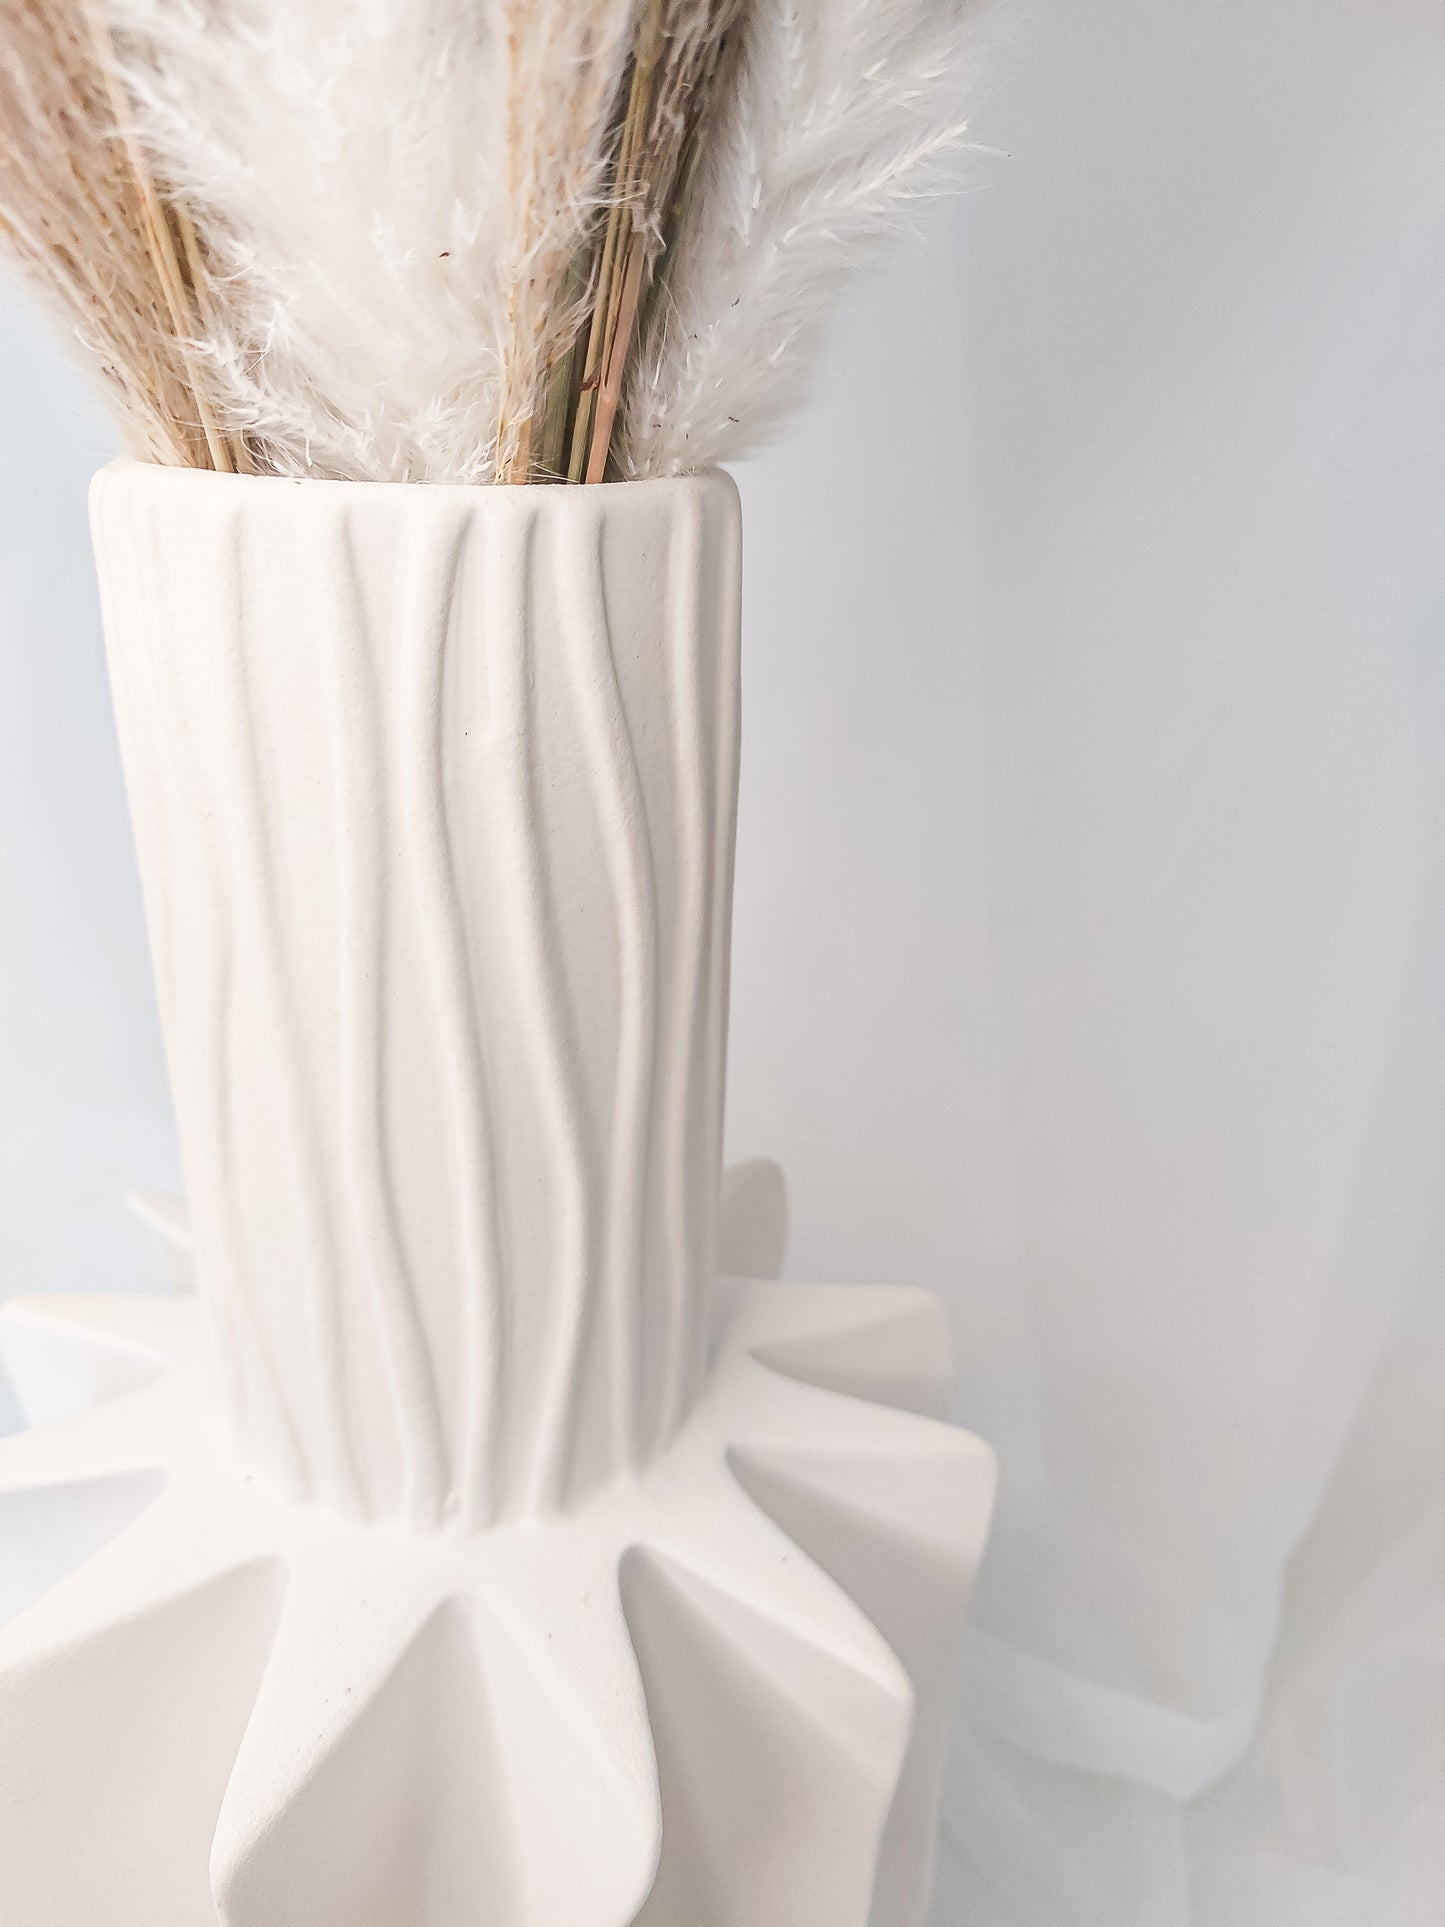 Canary Palm Ceramic Vase in White